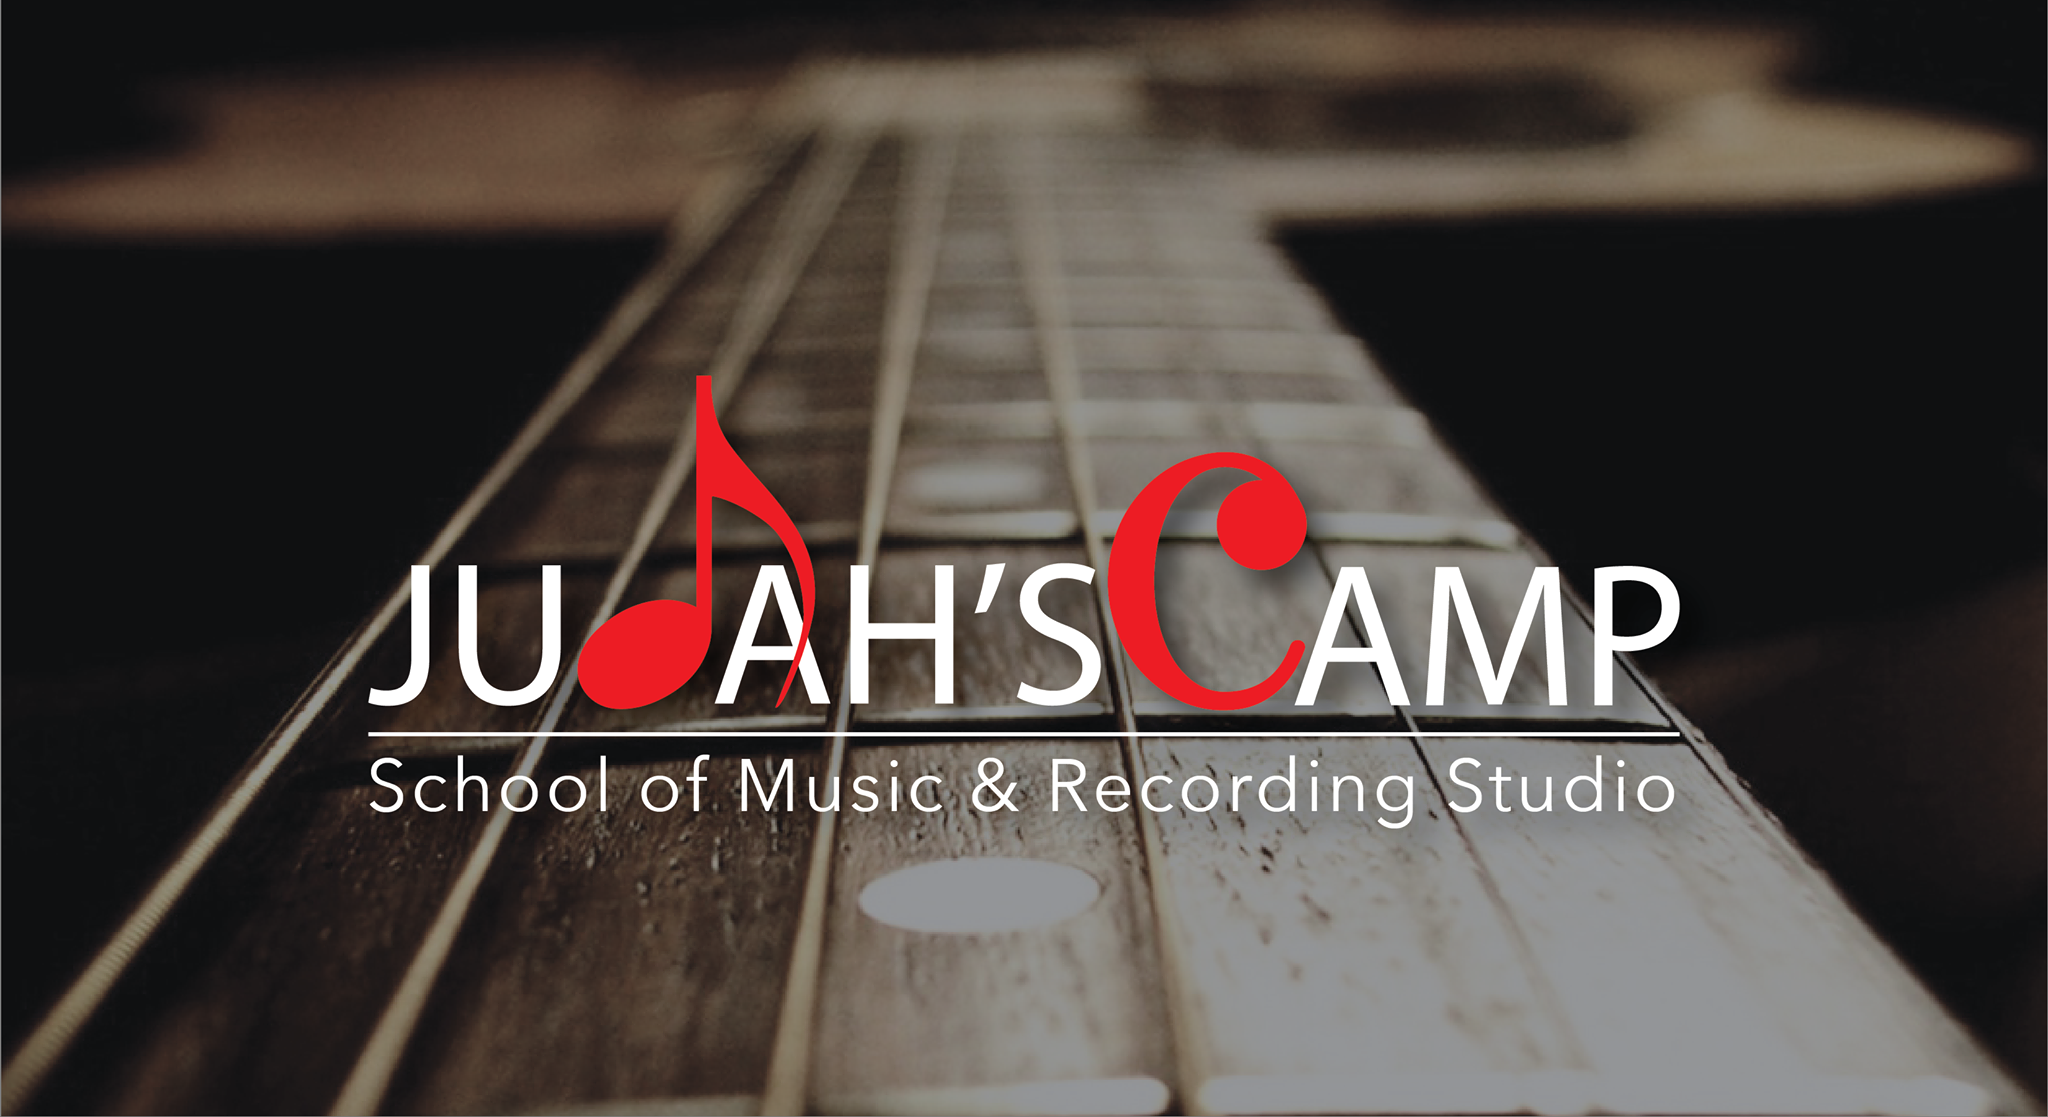 Judah's Camp School of Music